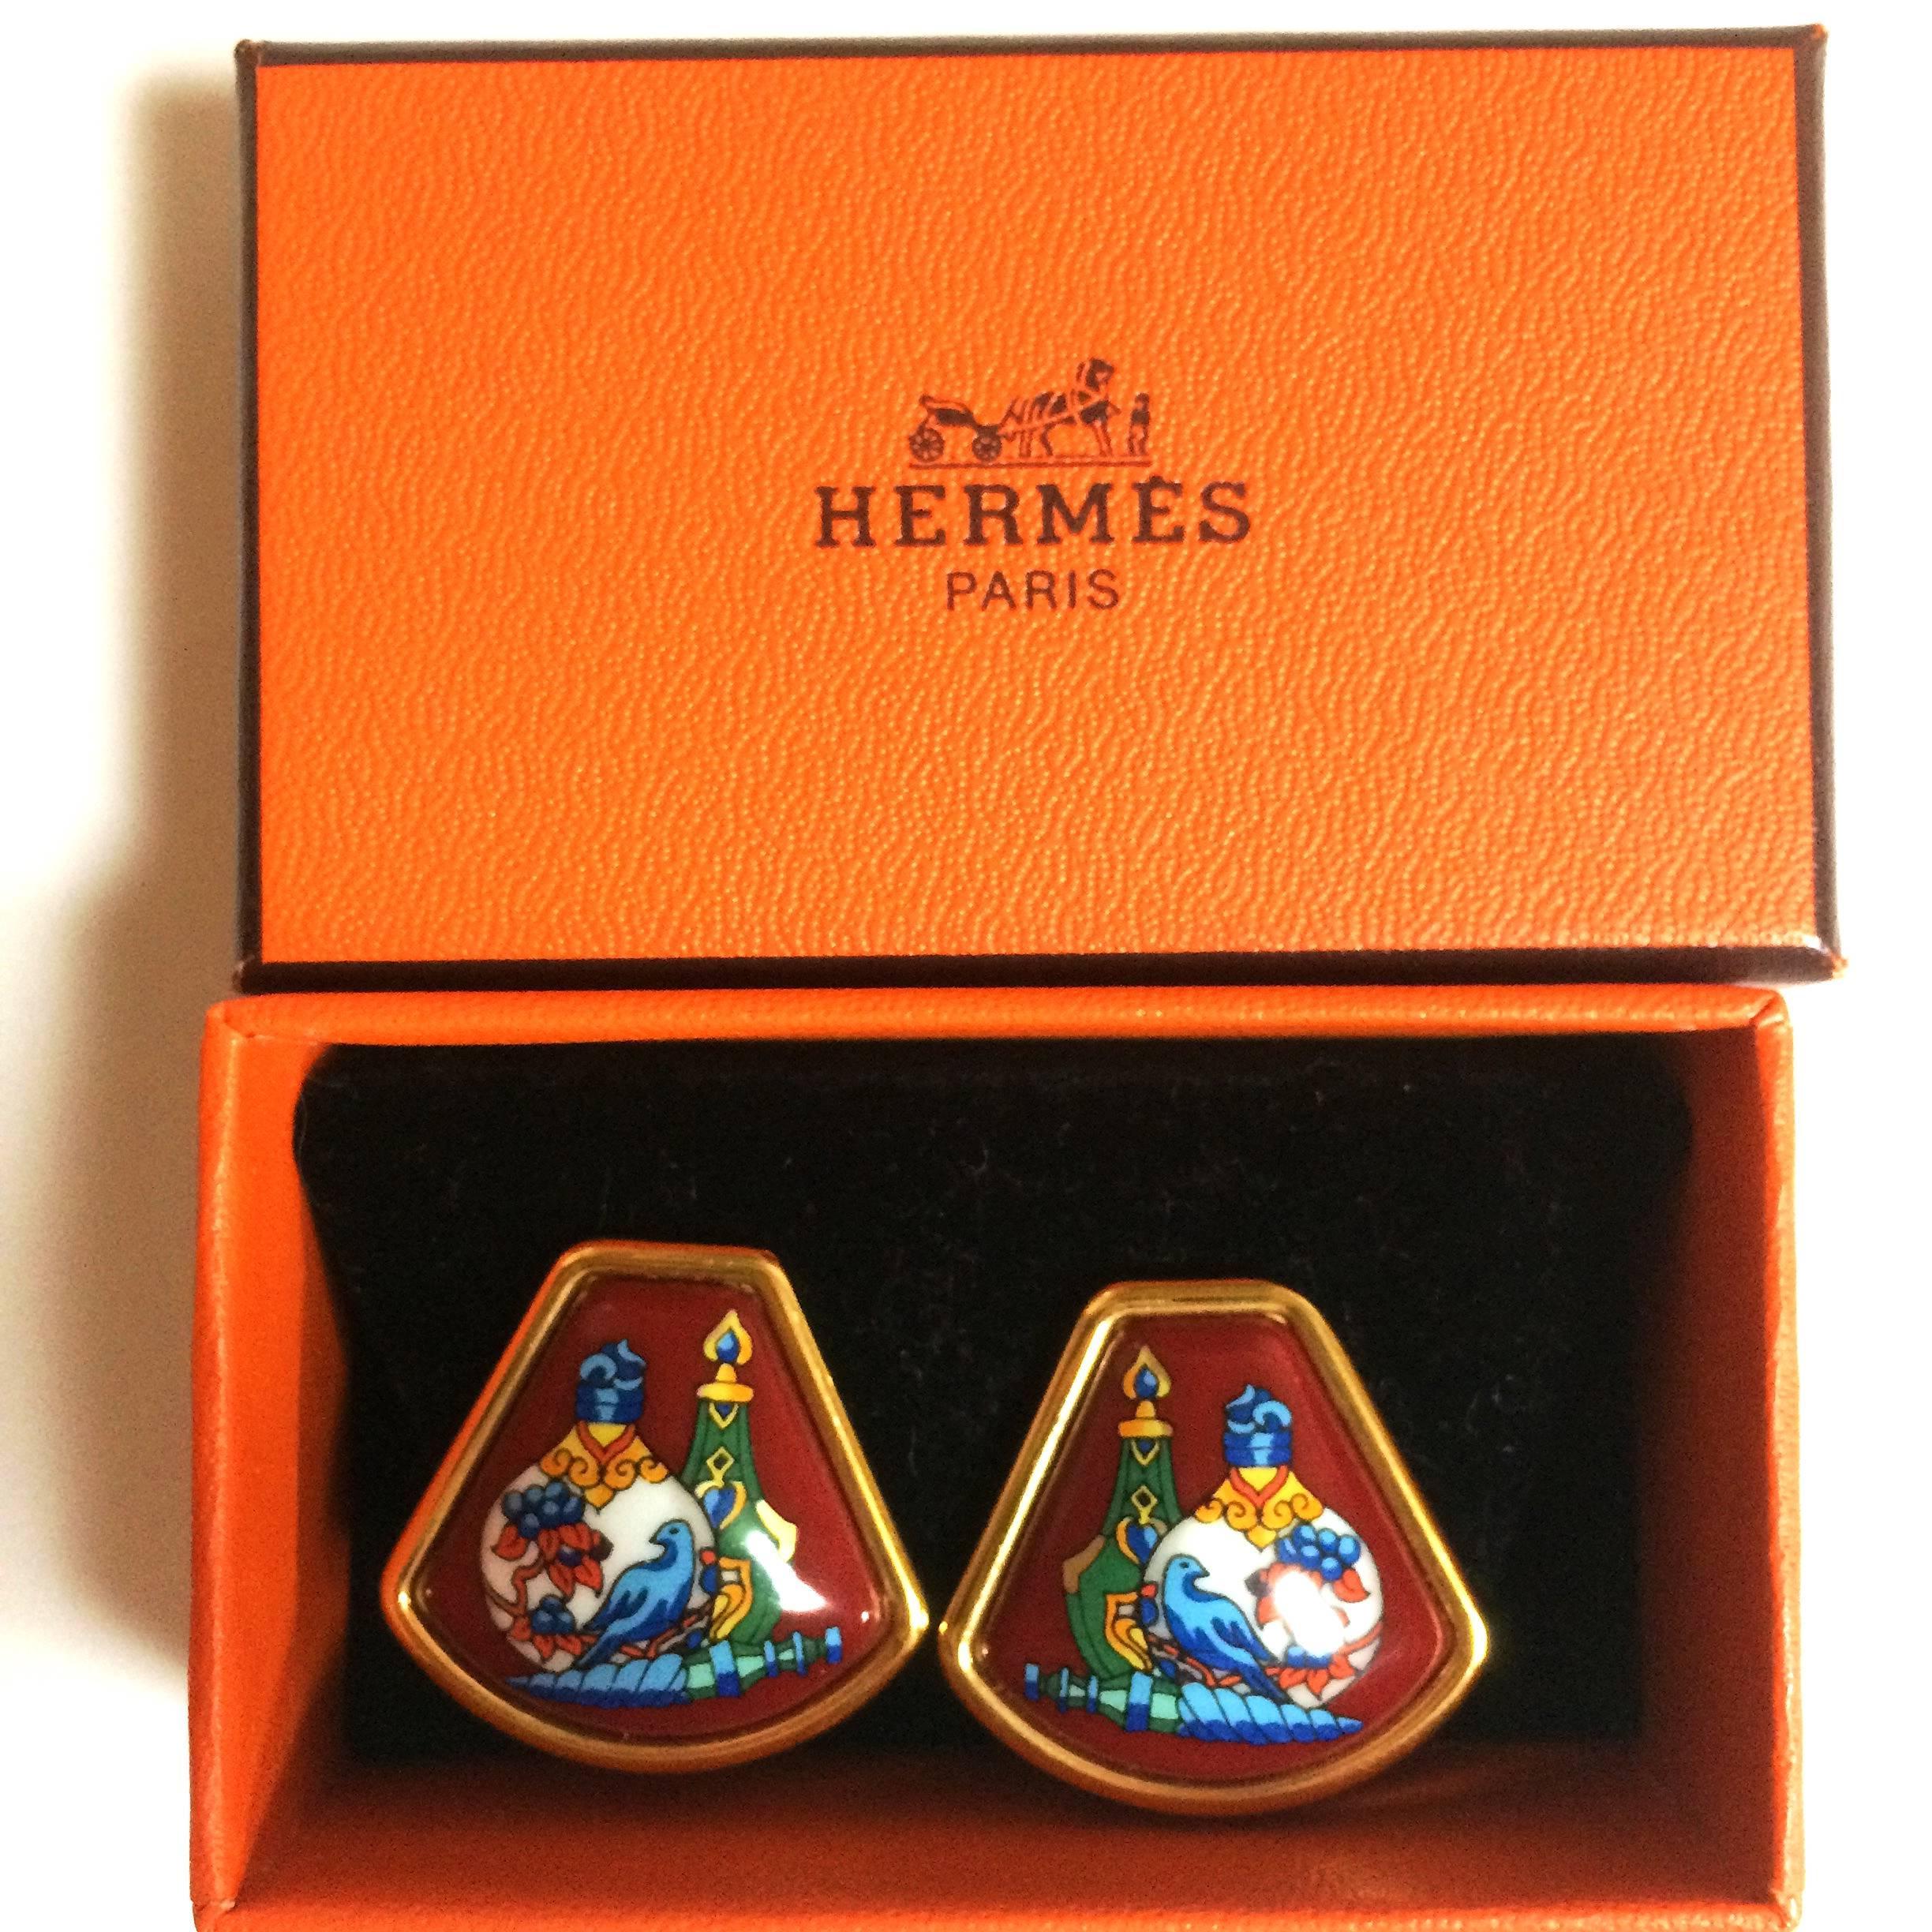 Vintage Hermes cloisonne golden earrings with colorful perfume bottle design. 1